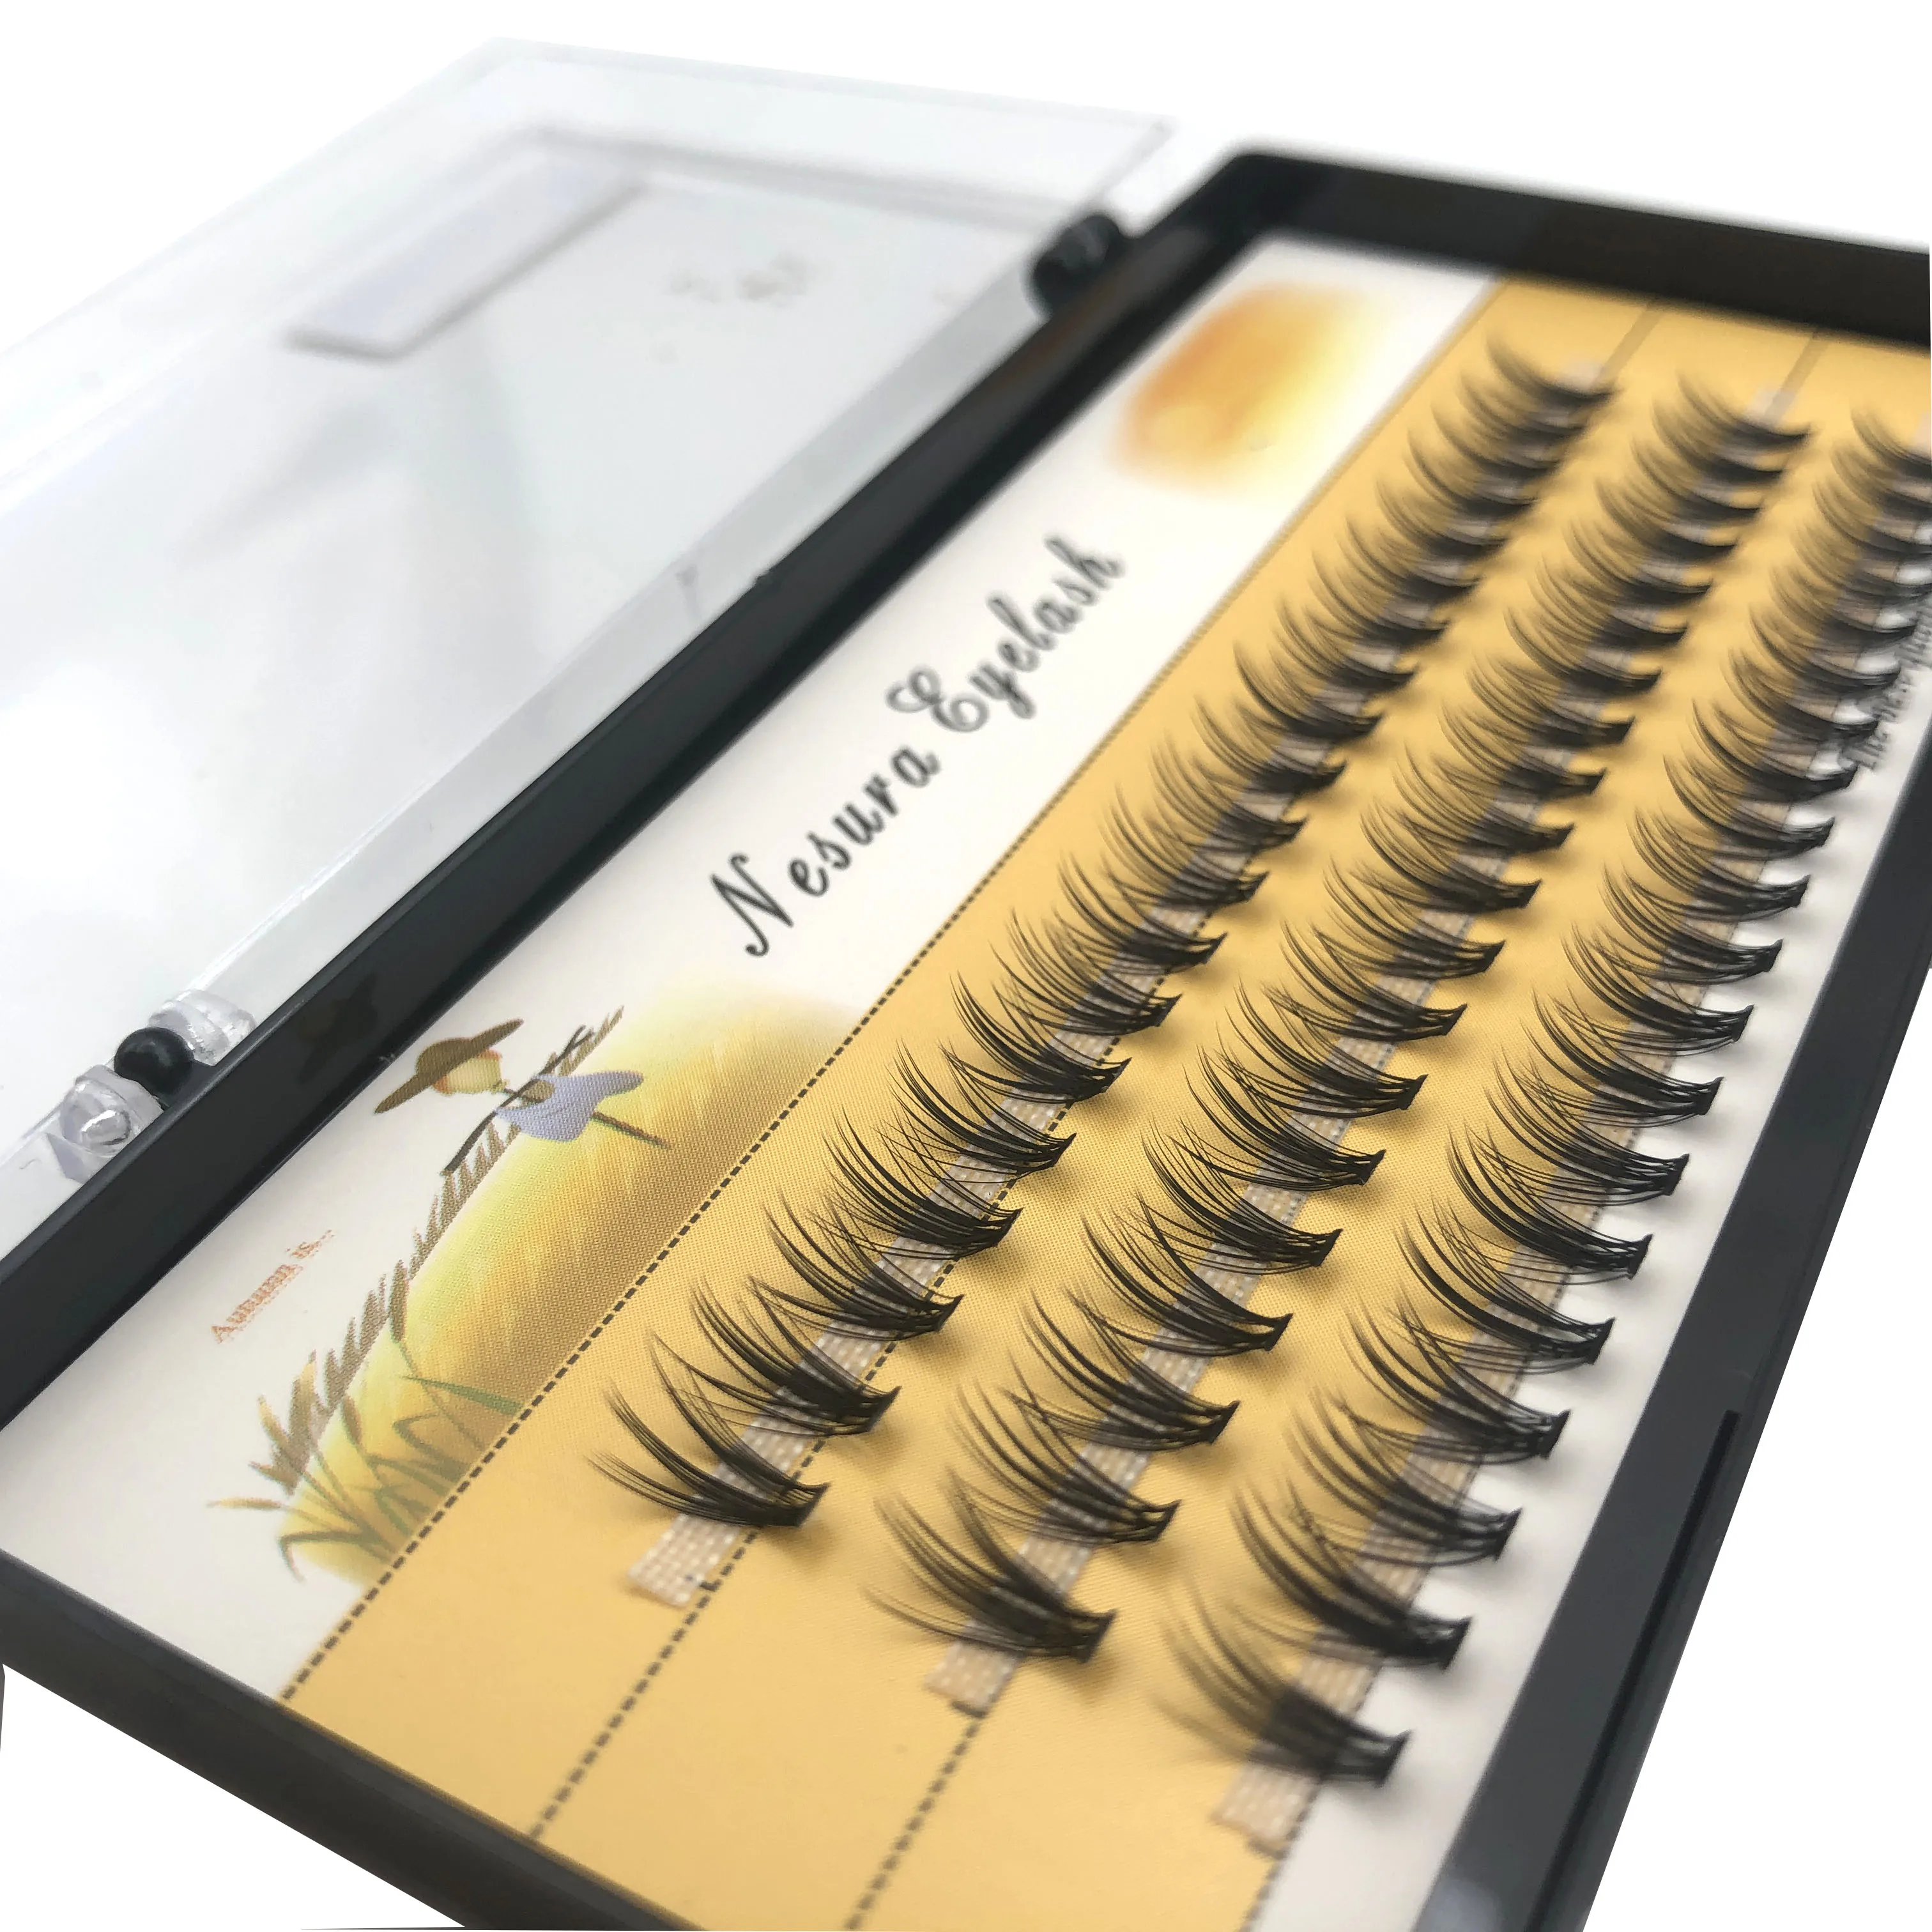 1 box 60 clusters 20/30D extension eyelashes, individual eyelashes, Natural Thick False Eyelashes, , Individual Eyelash Bunche